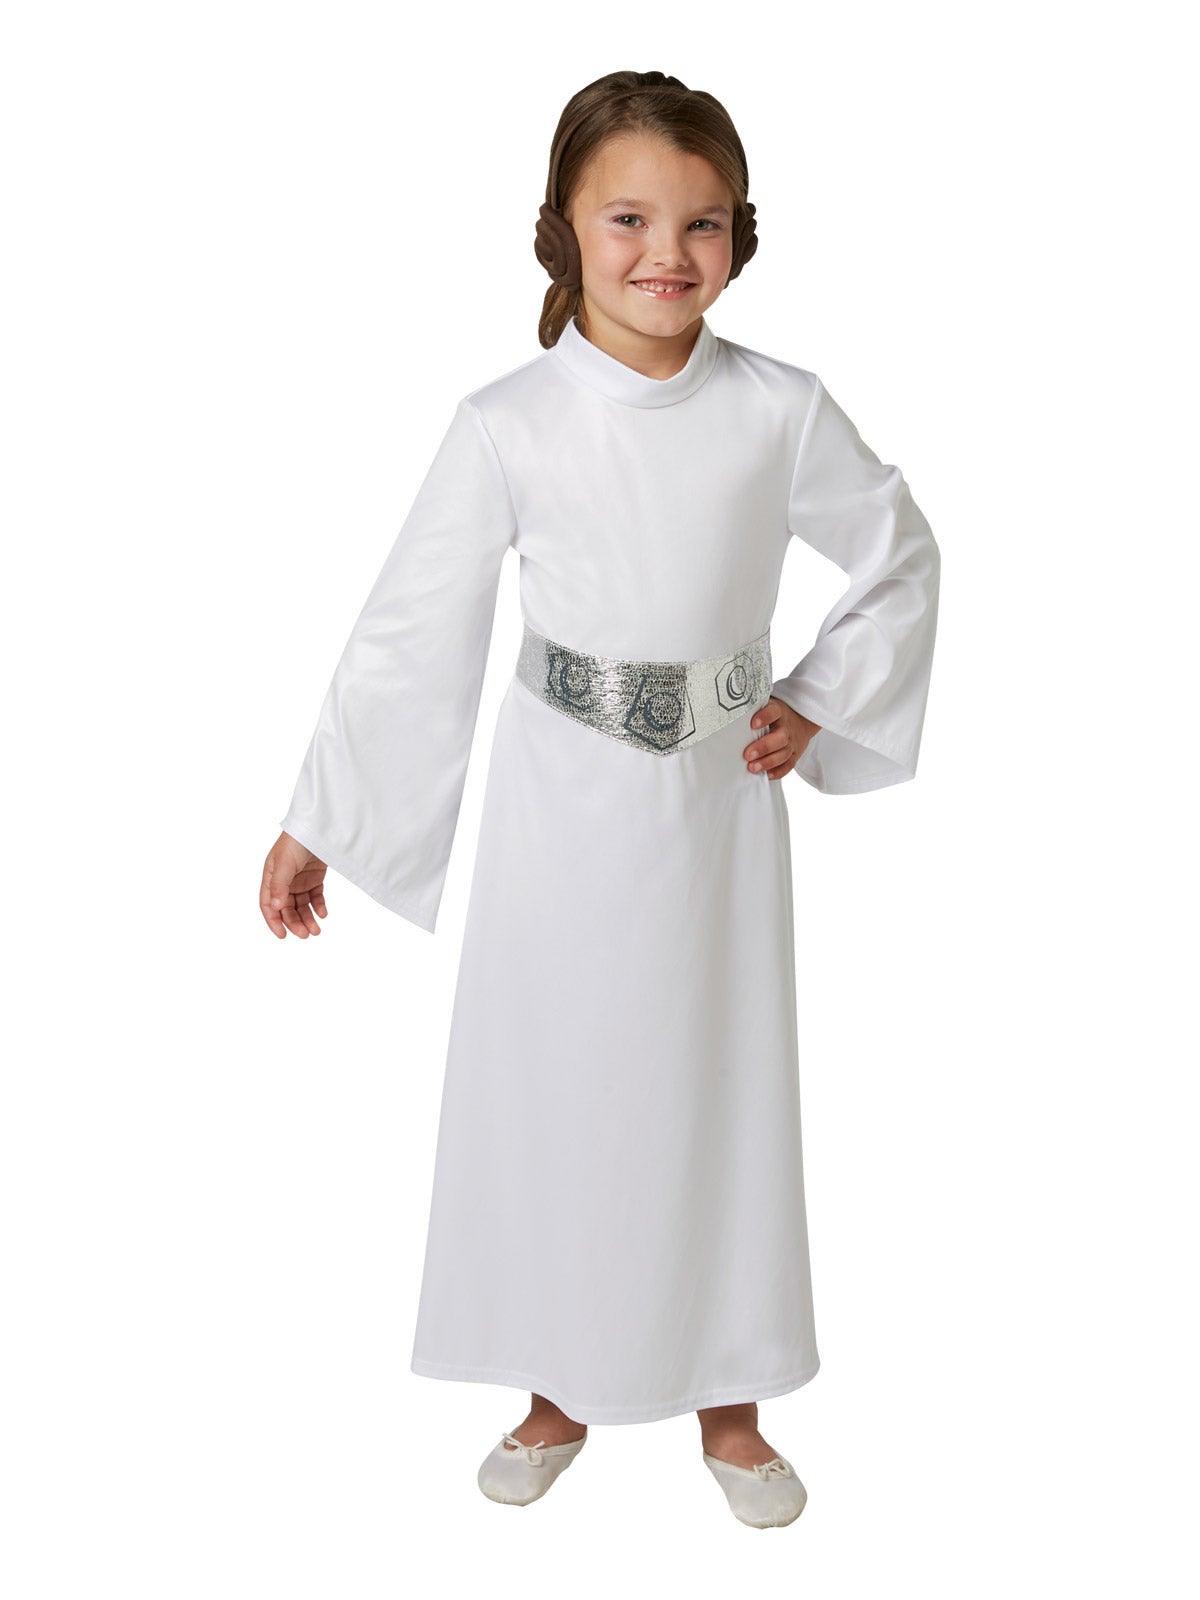 Princess Leia Costume for Kids - Disney Star Wars